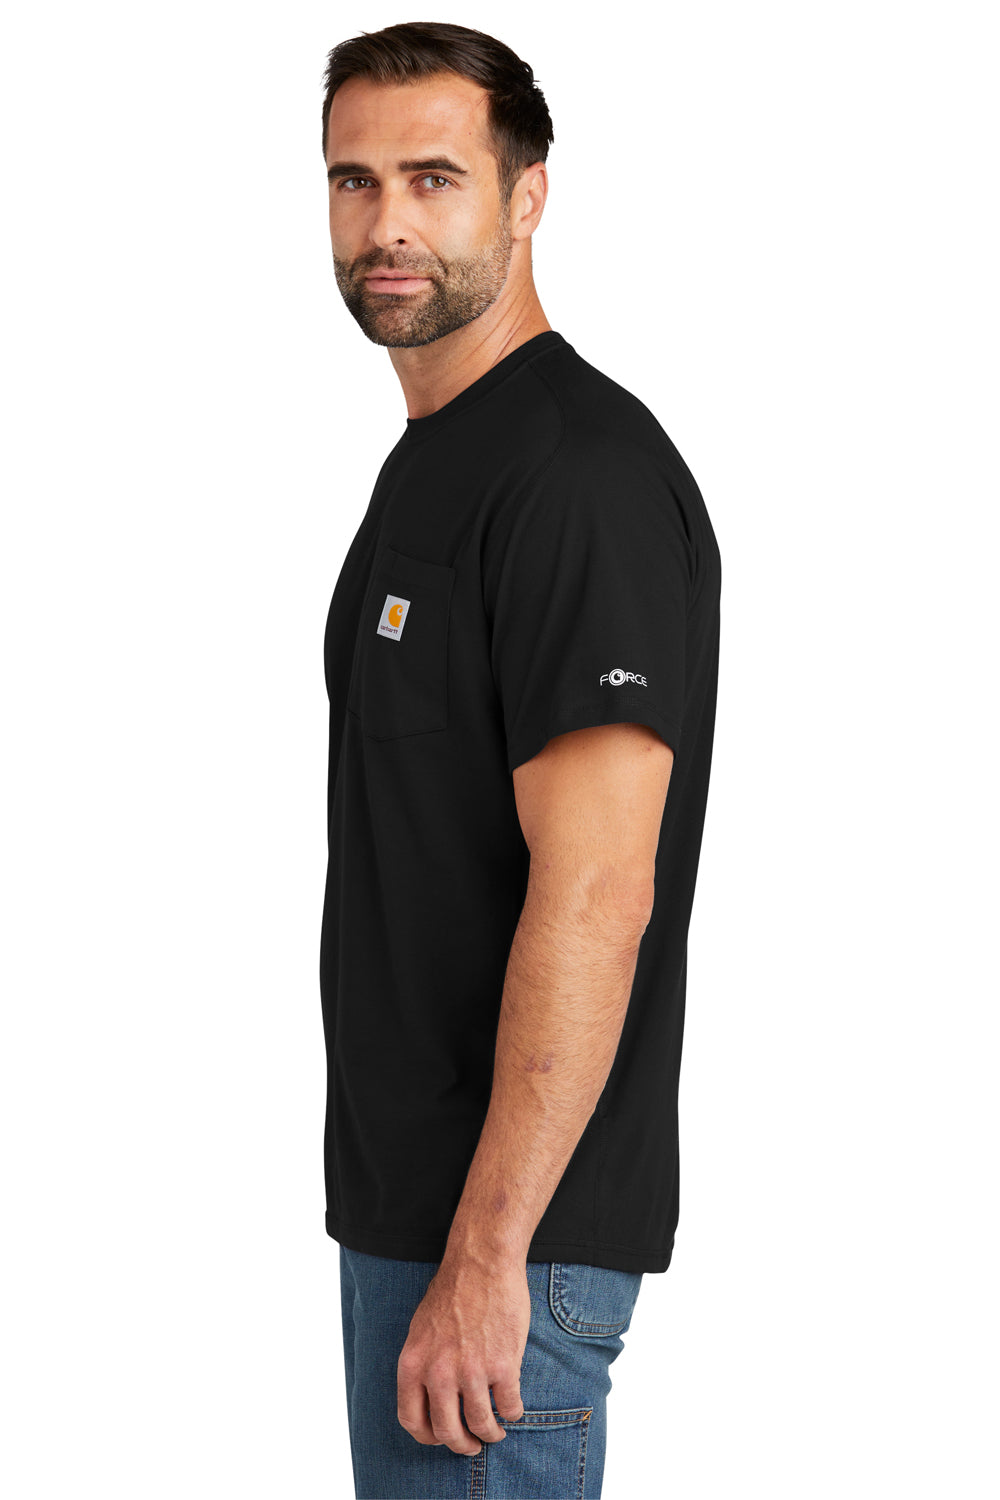 Carhartt CT104616 Mens Force Moisture Wicking Short Sleeve Crewneck T-Shirt w/ Pocket Black Model Side